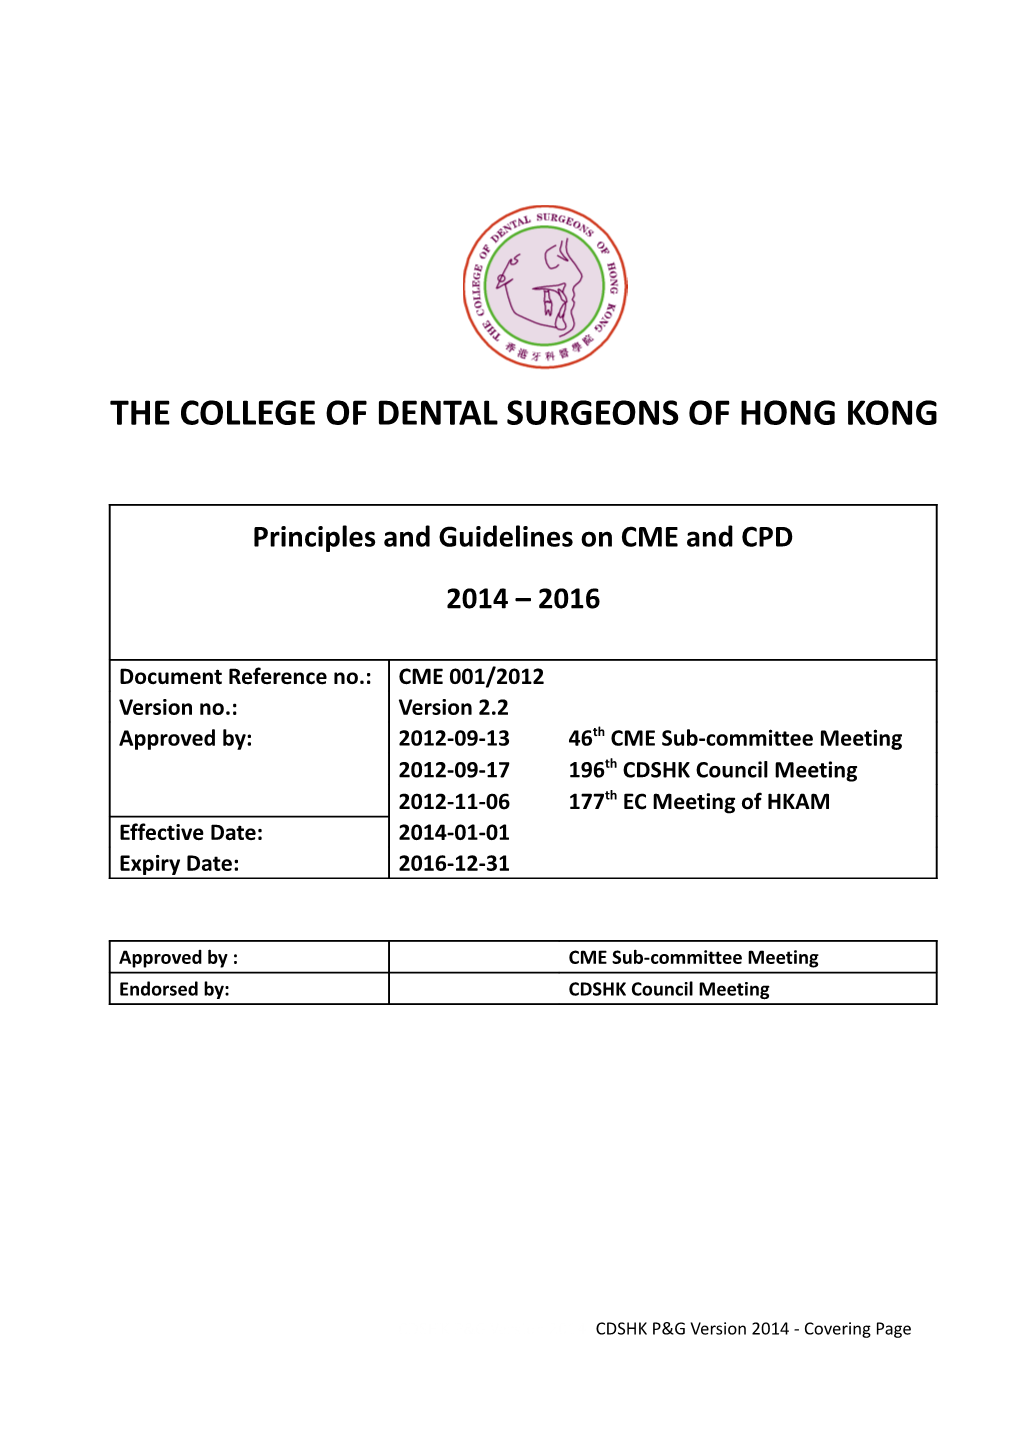 The College of Dental Surgeons of Hong Kong